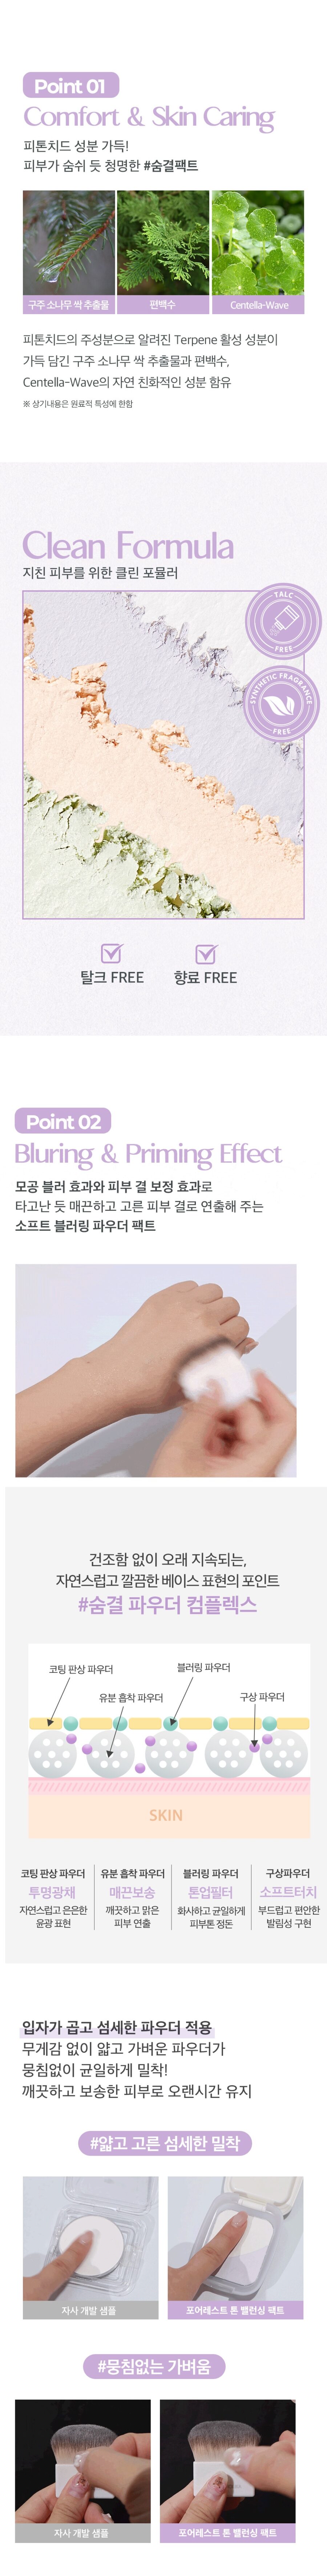 Holika Holika Porerest Tone Balancing Pact korean skincare product online shop malaysia hong kong china2